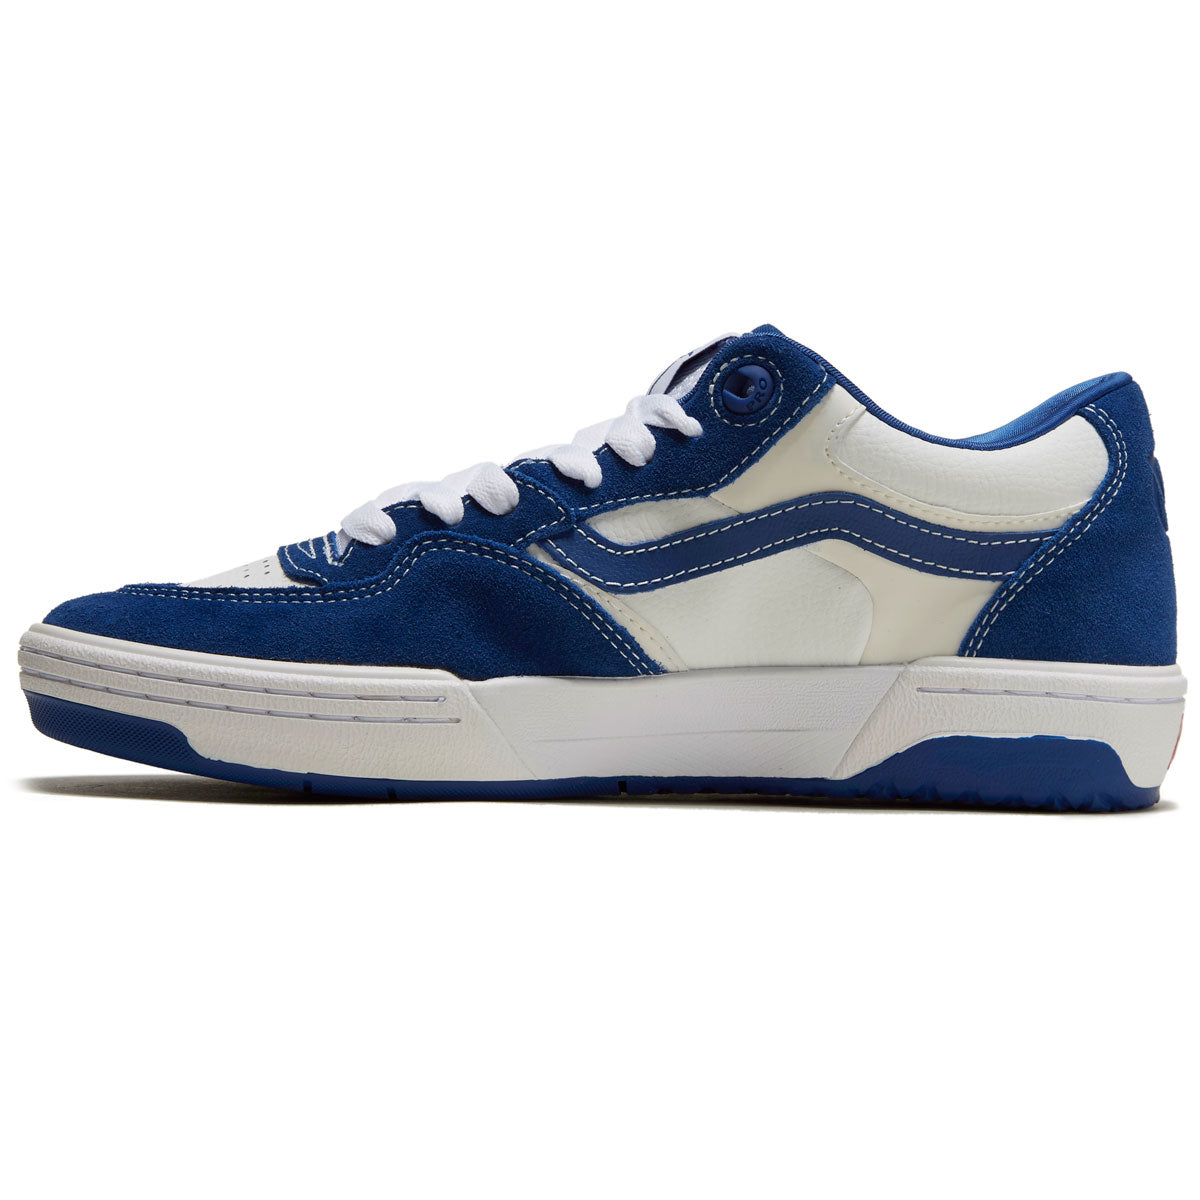 Vans Rowan 2 Shoes - True Blue/White image 2